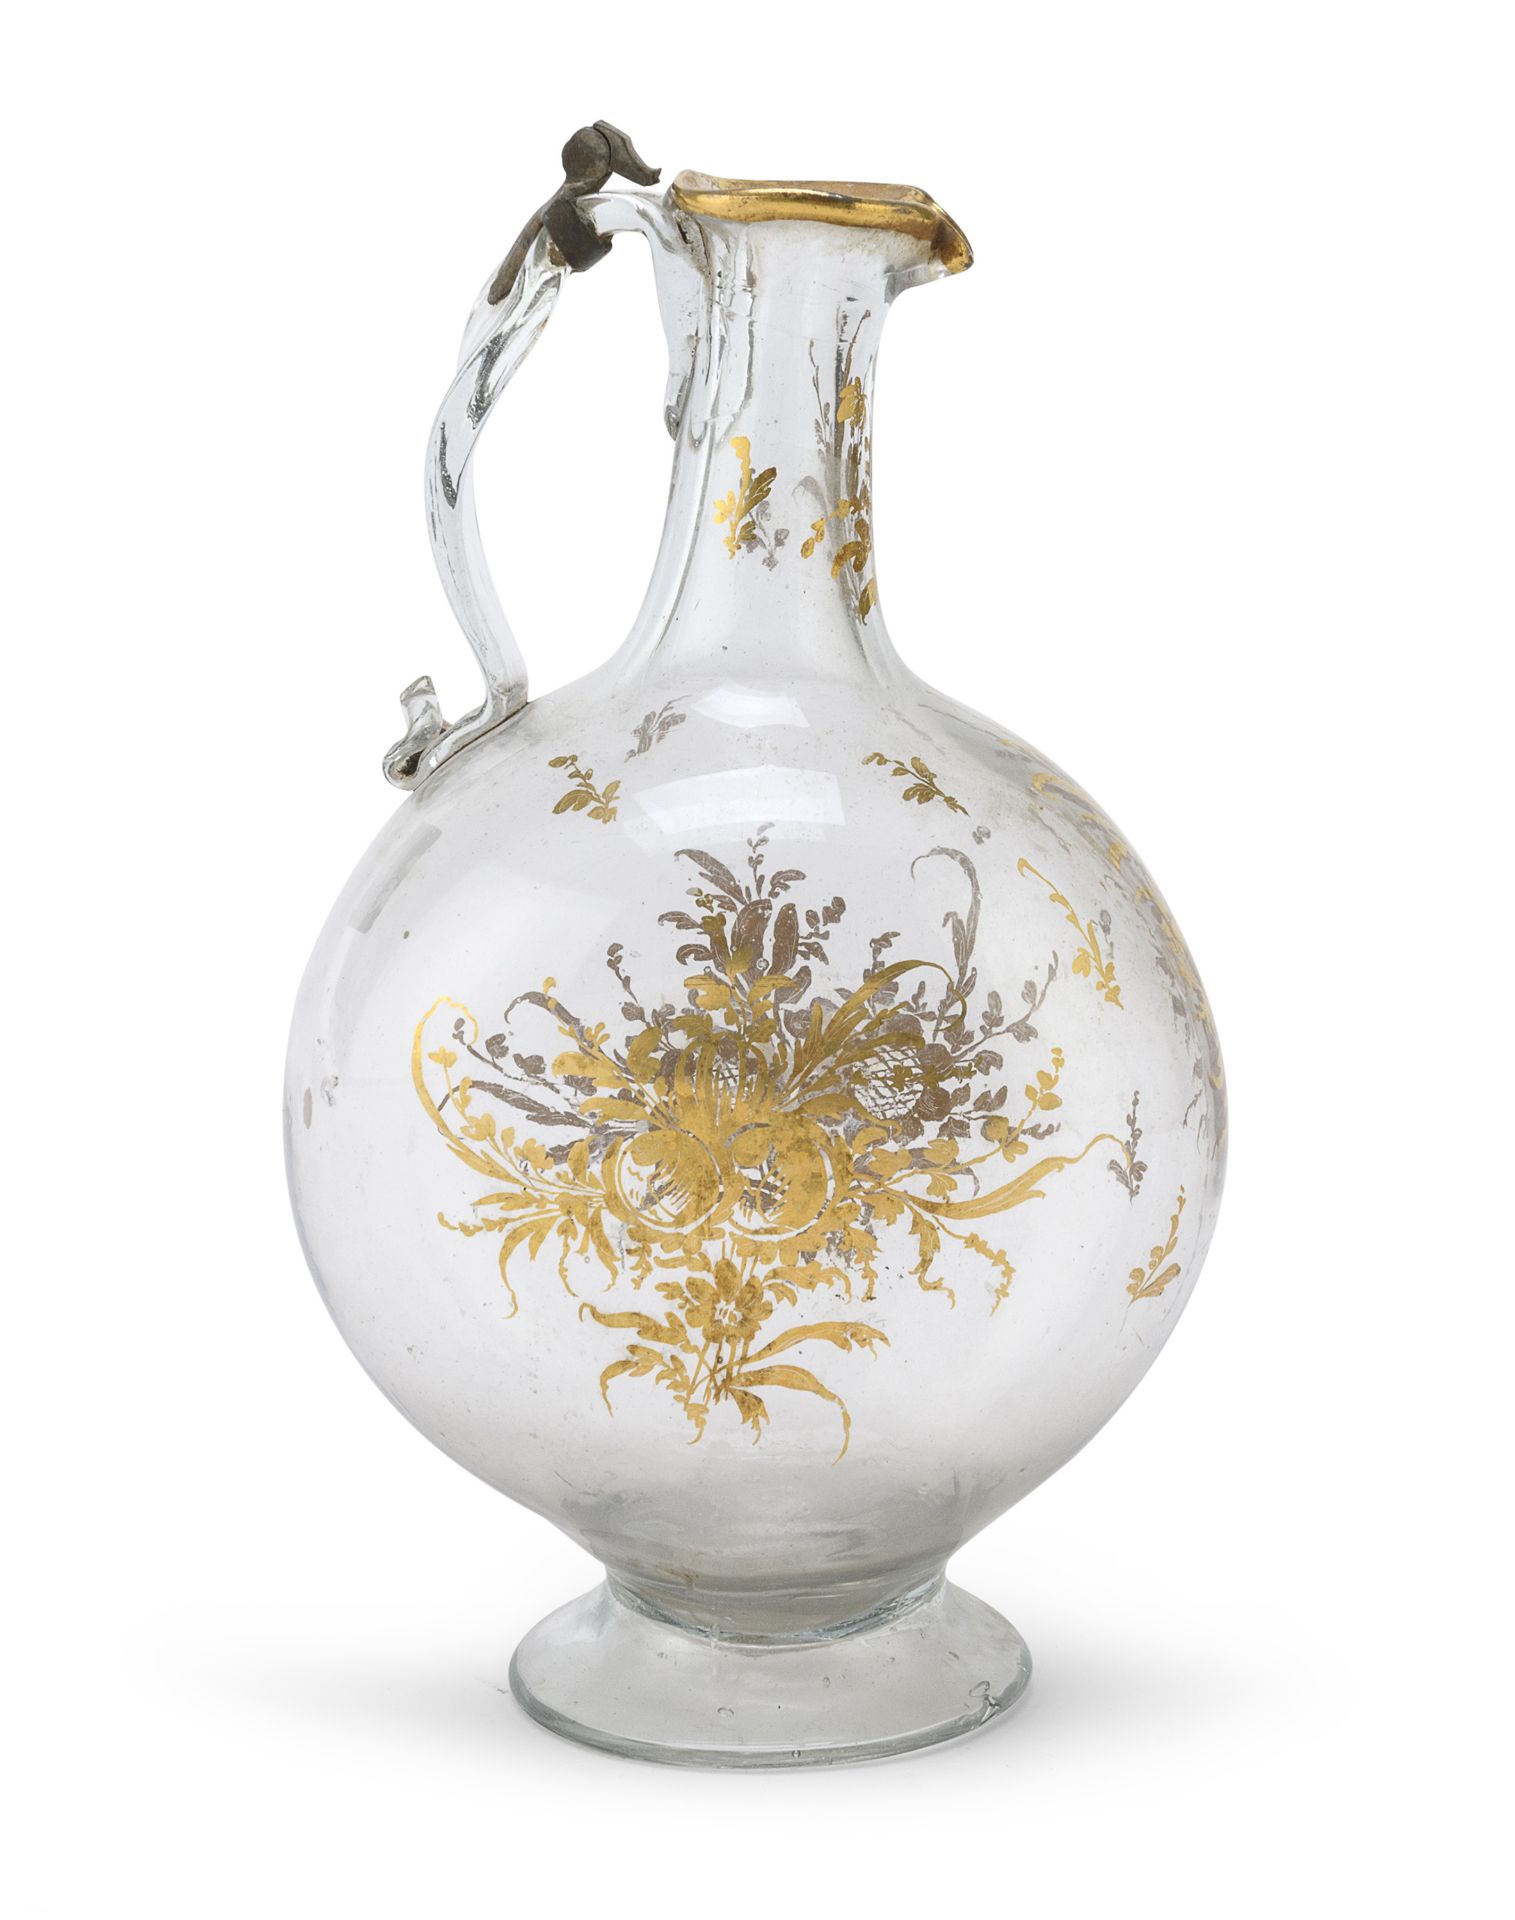 BLOWN GLASS BOTTLE PROBABLY VENICE 19TH CENTURY